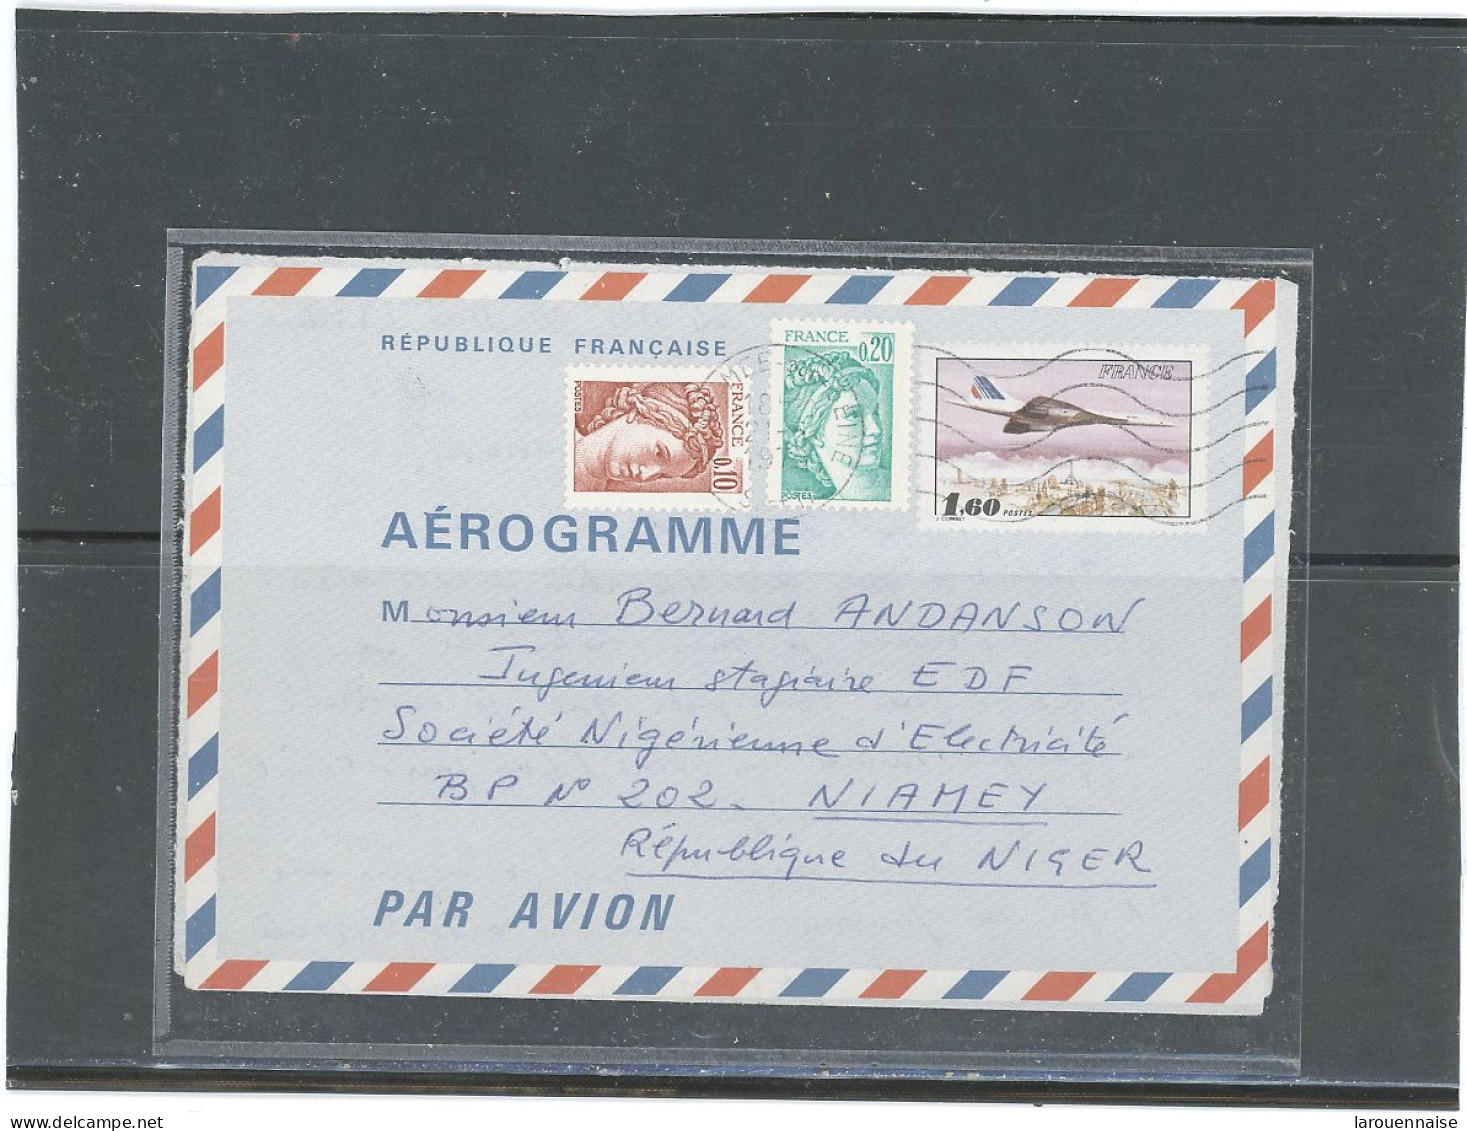 AEROGRAMME -N°1004 -AEF-+SABINE 0,10 +0,20 COMPLÉMENT NOUVEAU TARIF (1,90) DESTINATION NIGER - Aérogrammes